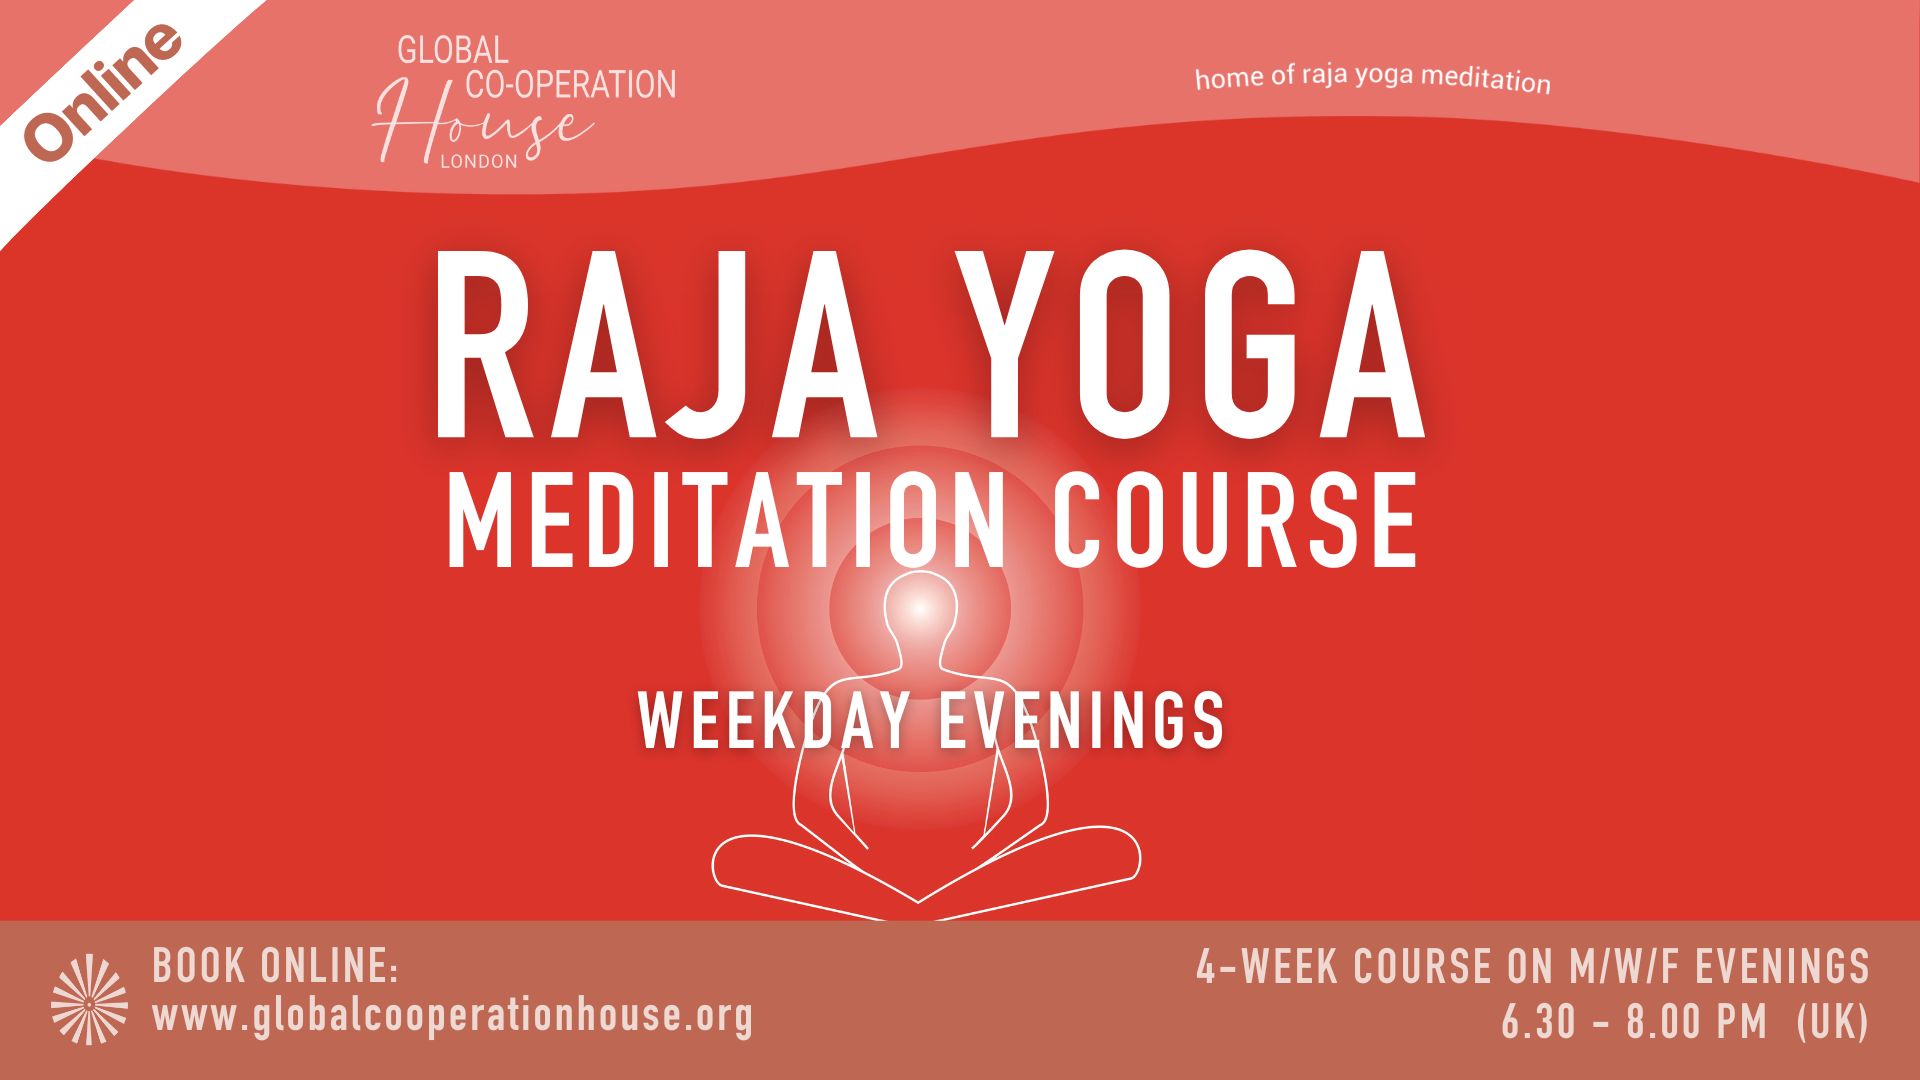 Raja Yoga Meditation Course - Weekday Evenings 